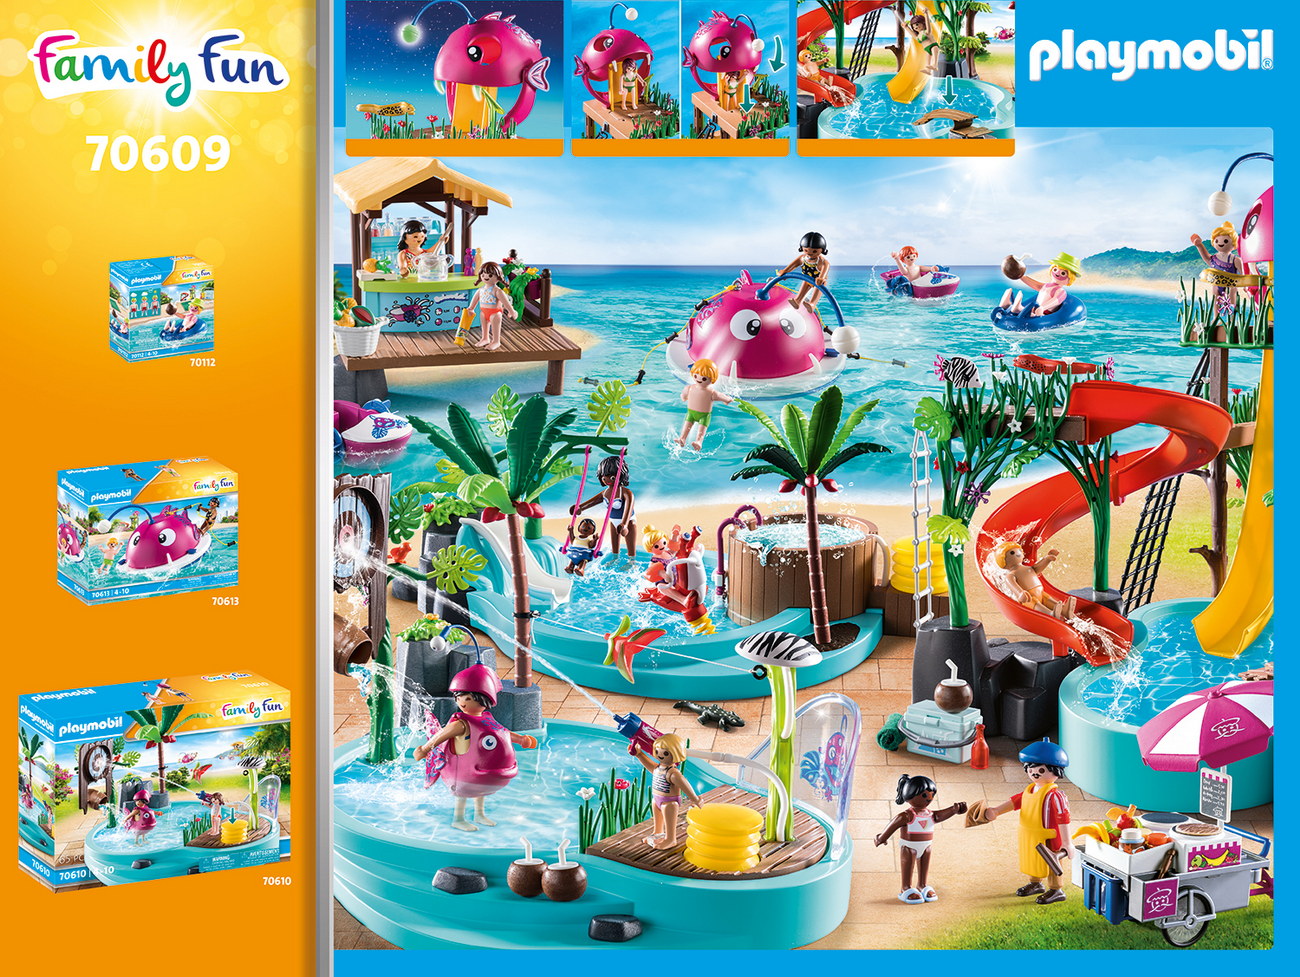 Playmobil 70609 - Aqua Park mit Rutschen - Family Fun